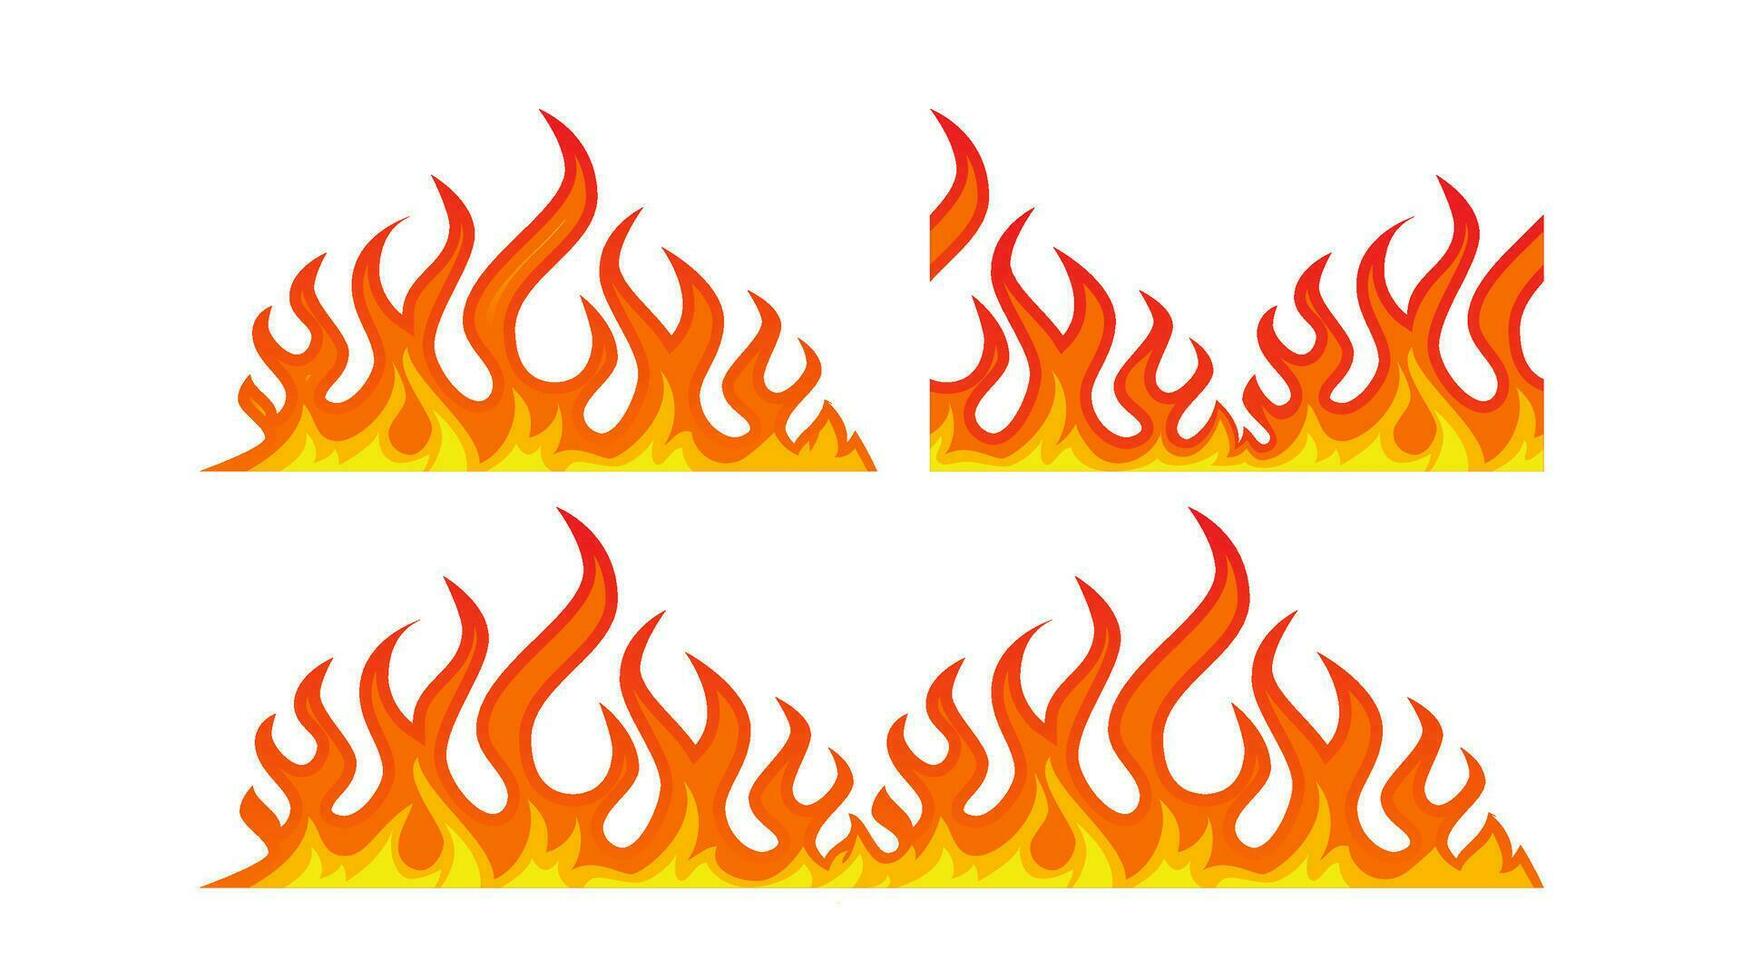 Feuer Flamme Element Illustration nahtlos Karikatur Vektor Firewall texturiert Frames einstellen